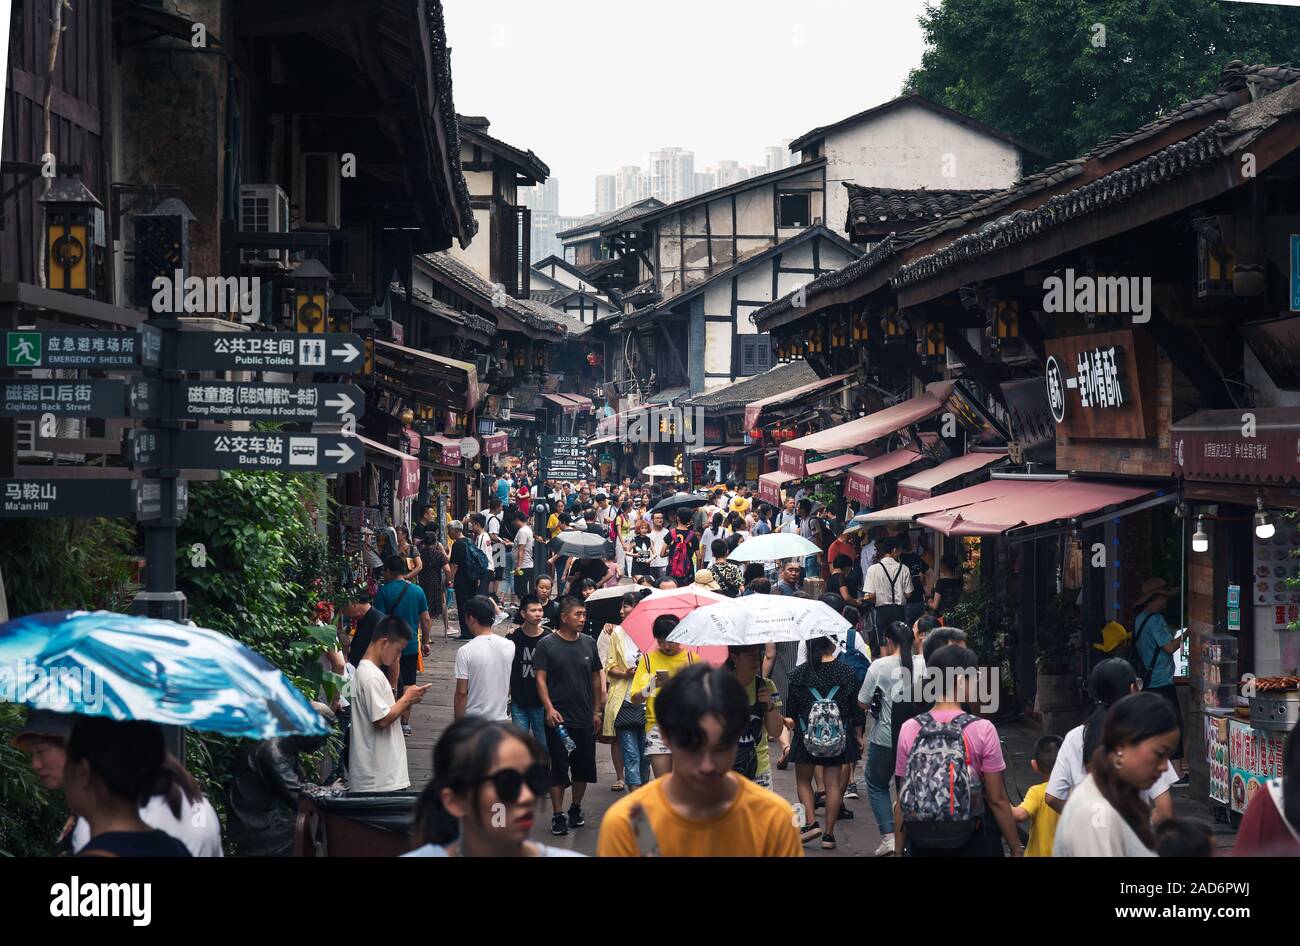 Chongqing, China - July 24, 2019: Crowded Ciqikou ancient town in the Shapingba District of Chongqing Municipality of People's Republic of China Stock Photo